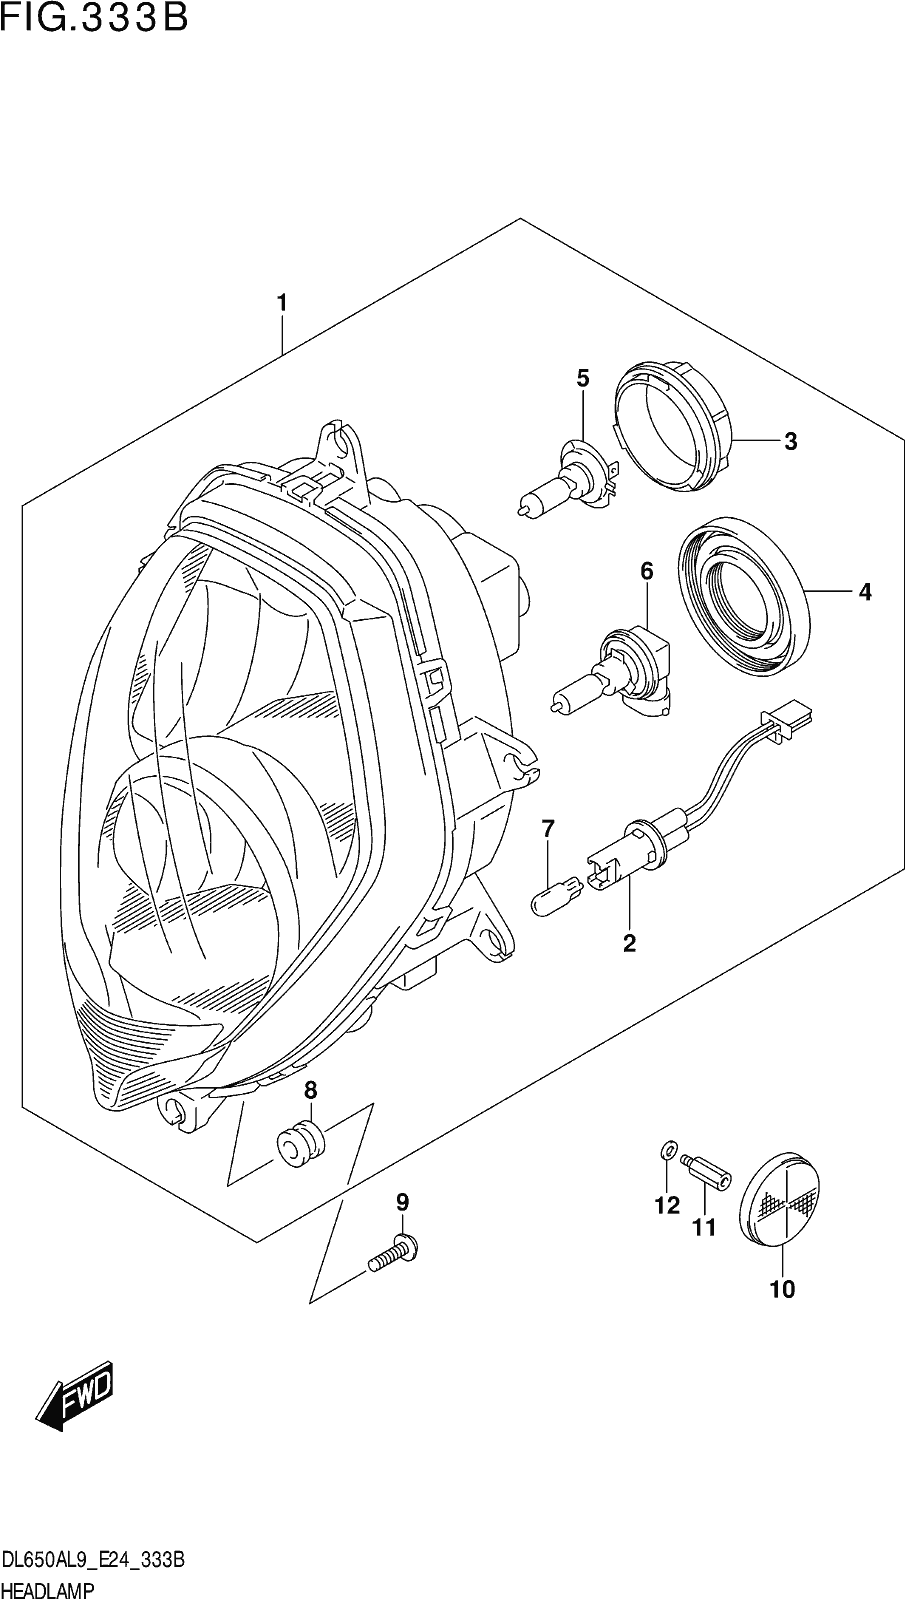 Fig.333b Headlamp